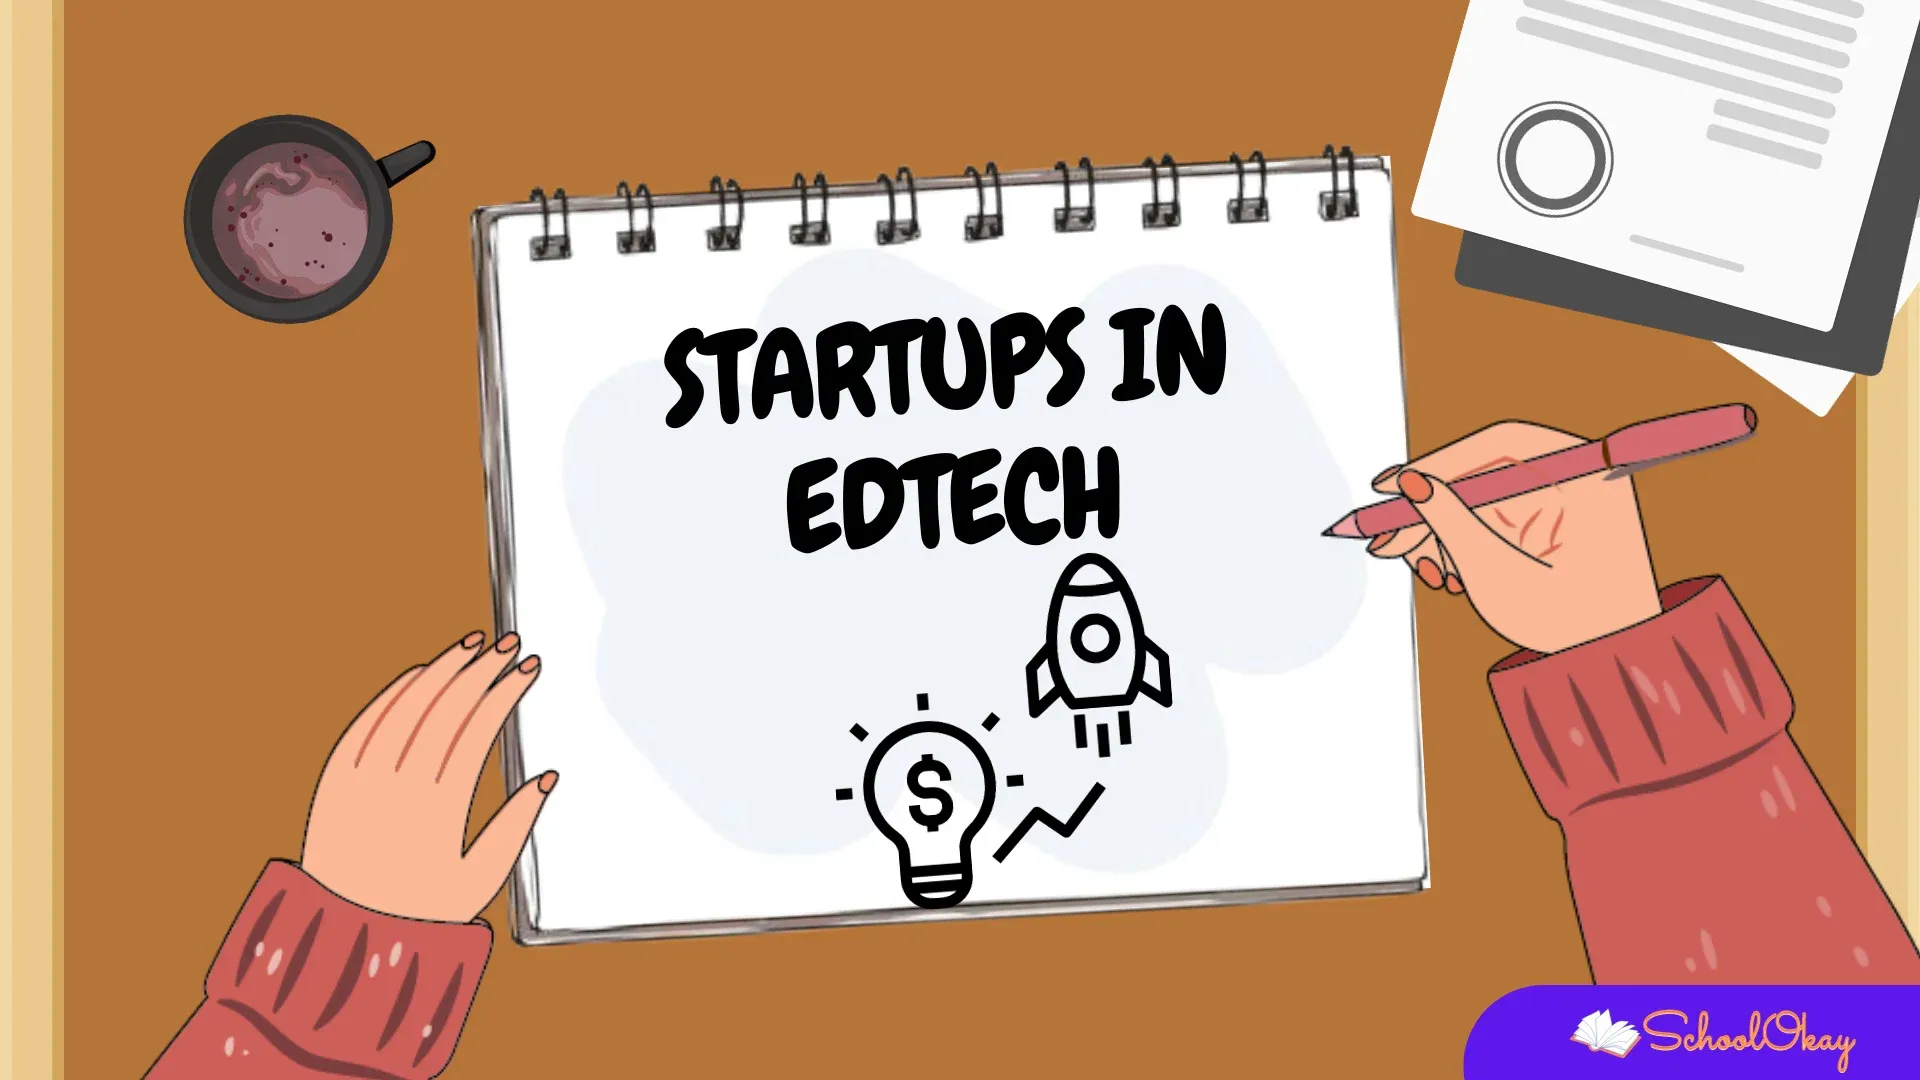 Startups in Edtech